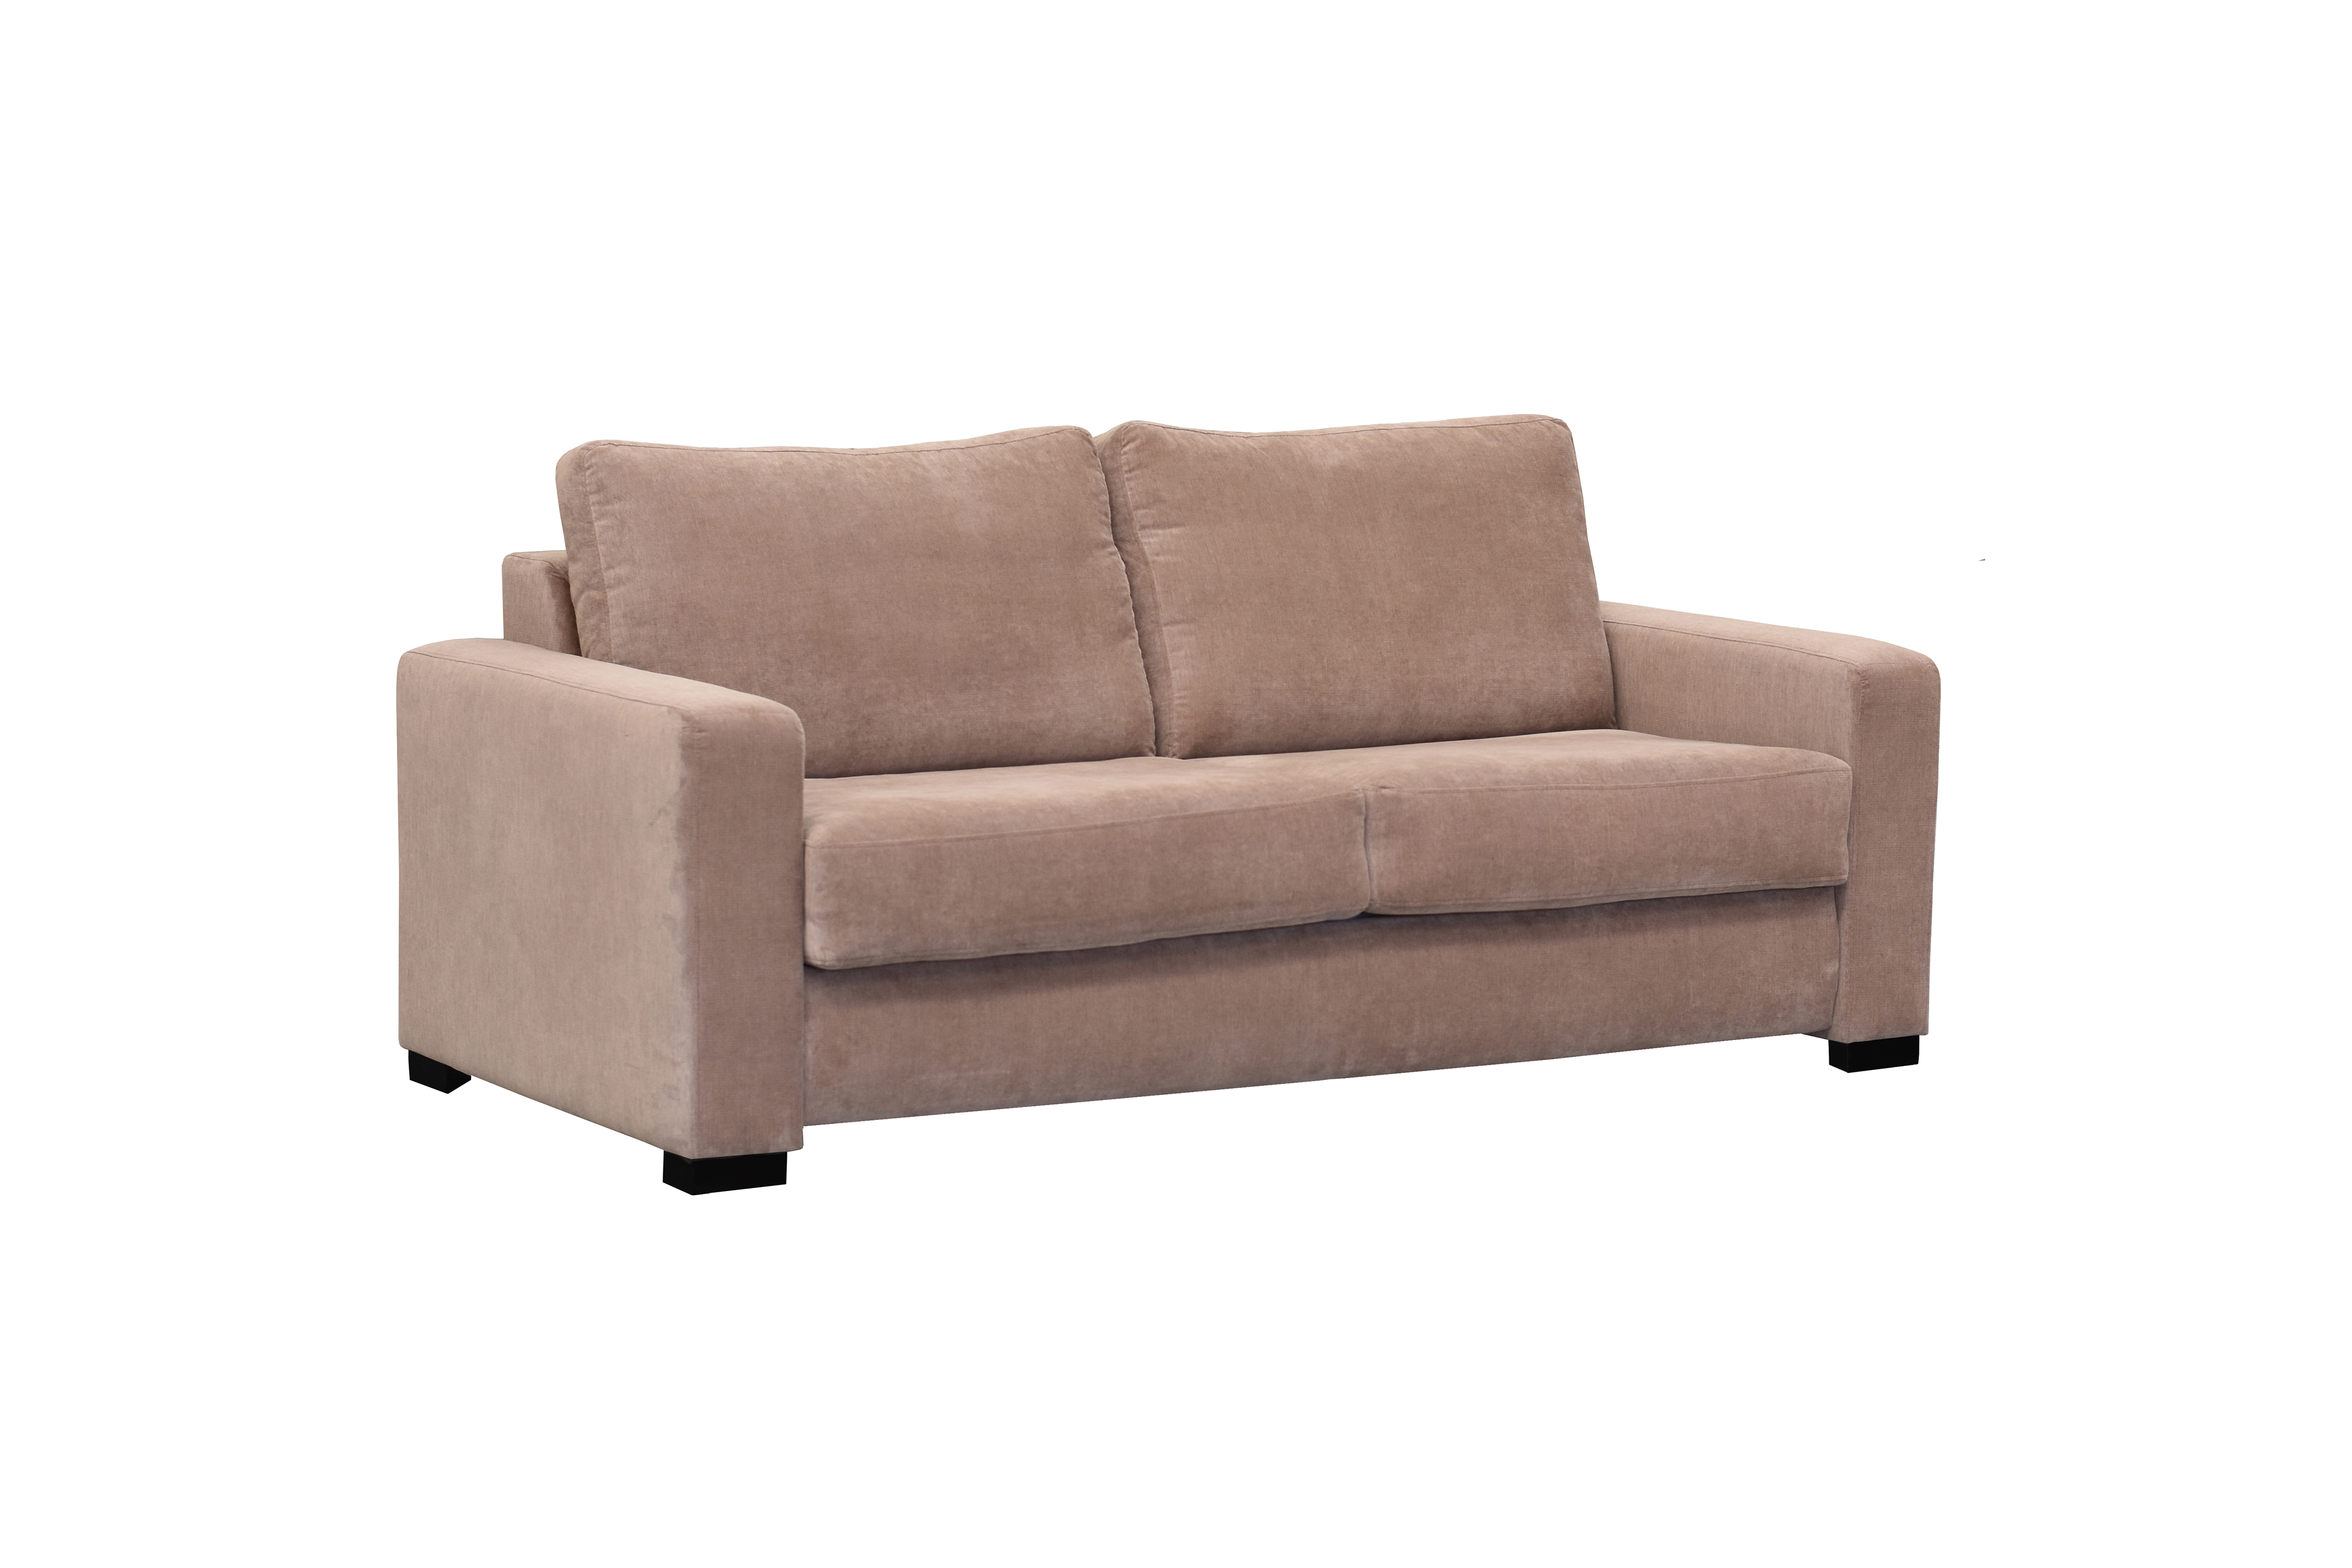 Roseland 3 Seater Sofa Bed Brown